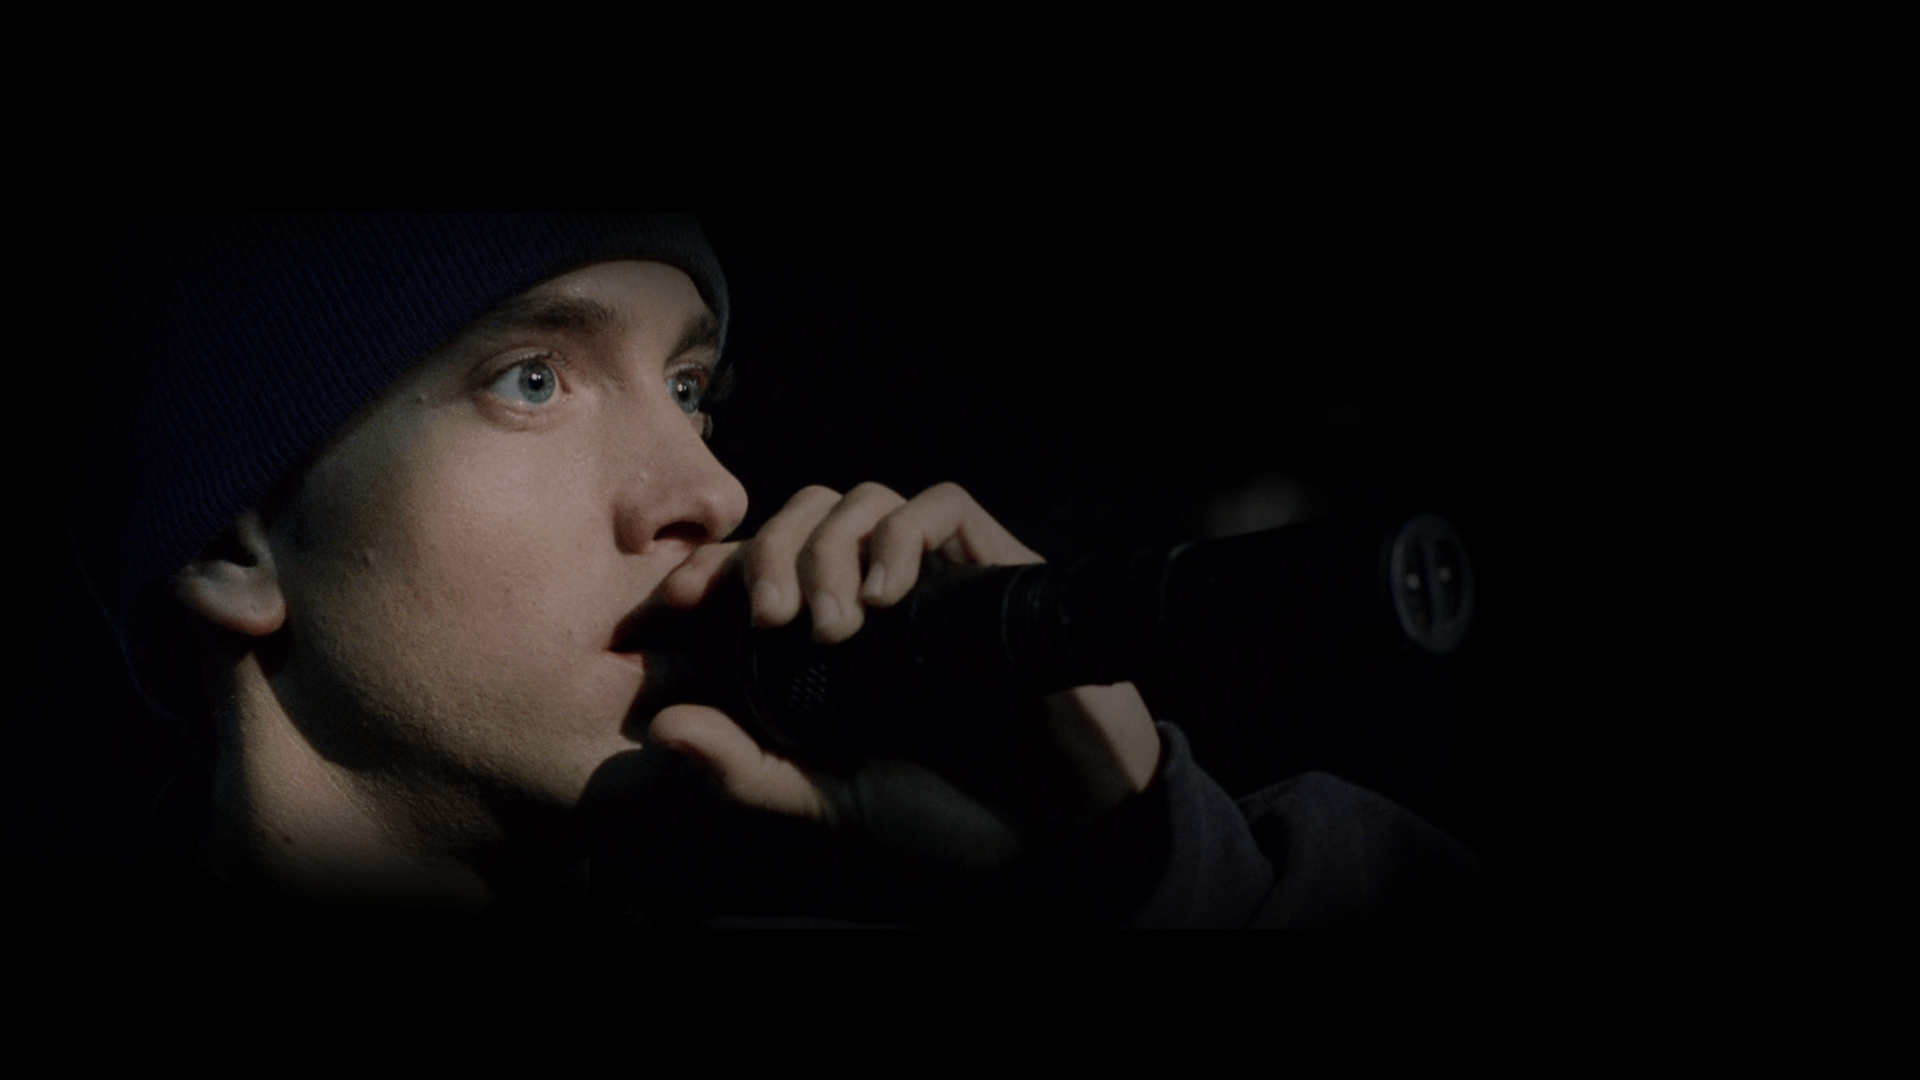 Eminem 1080p 8 Mile WALLPAPER